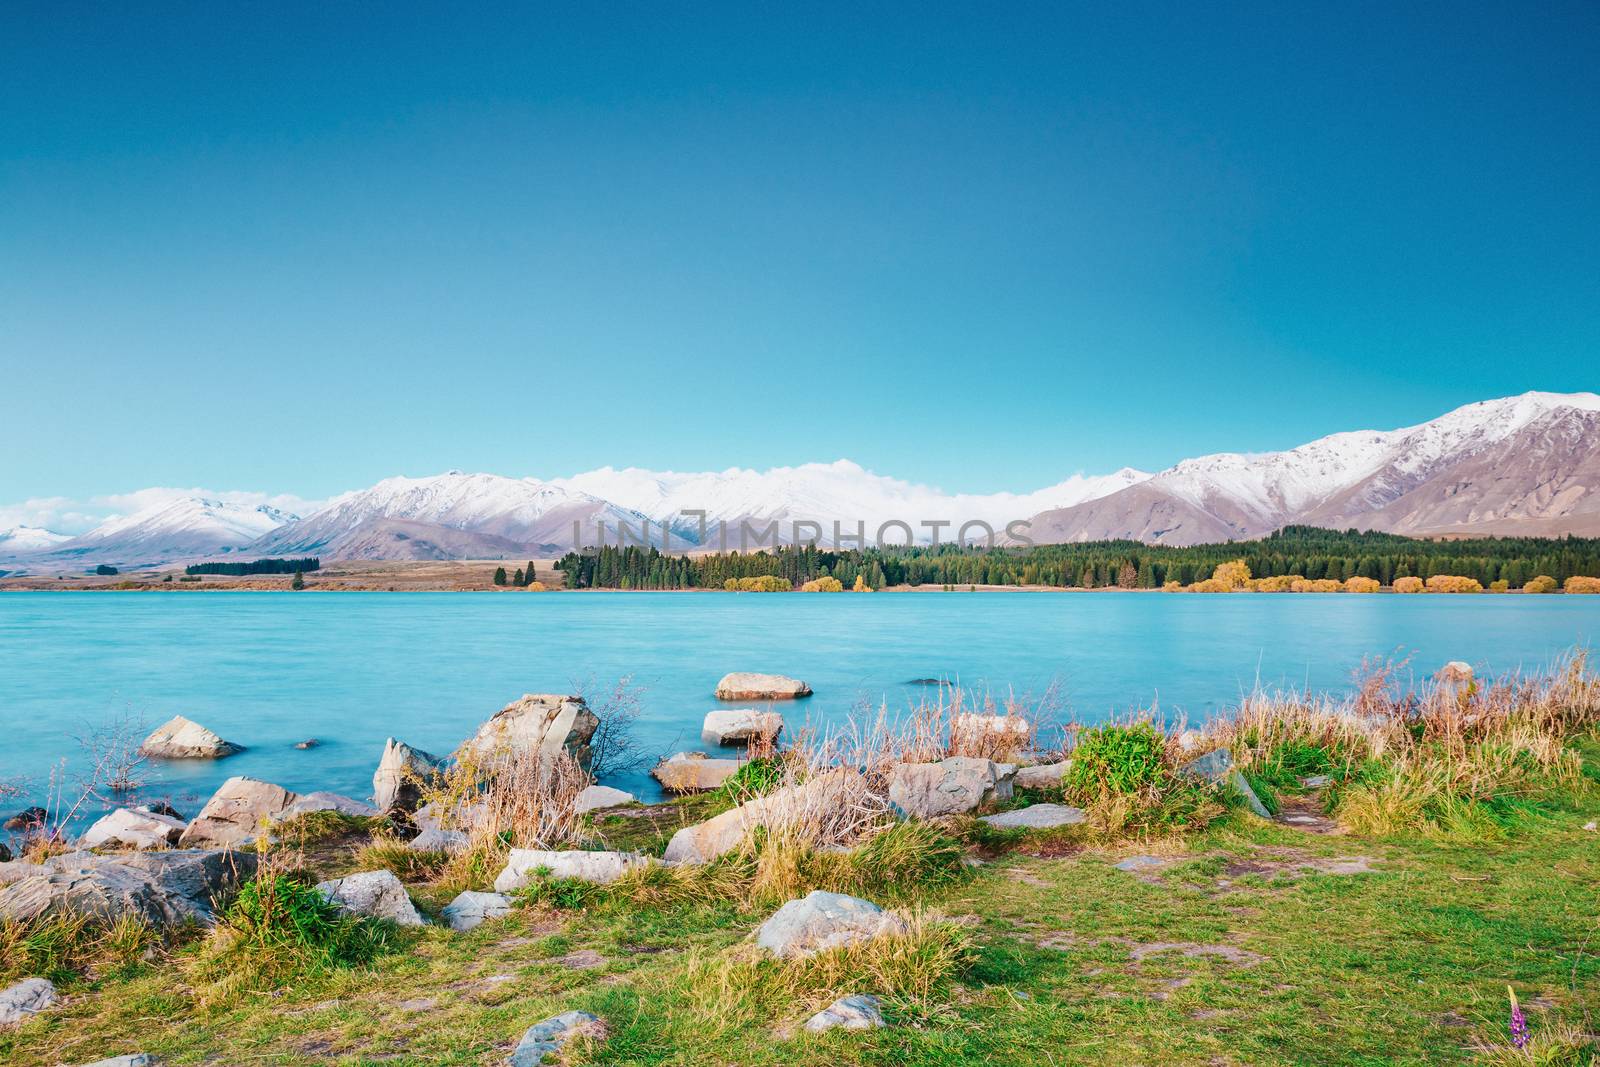 amazing landscapes viewed from Tekapo observatory, New Zealand